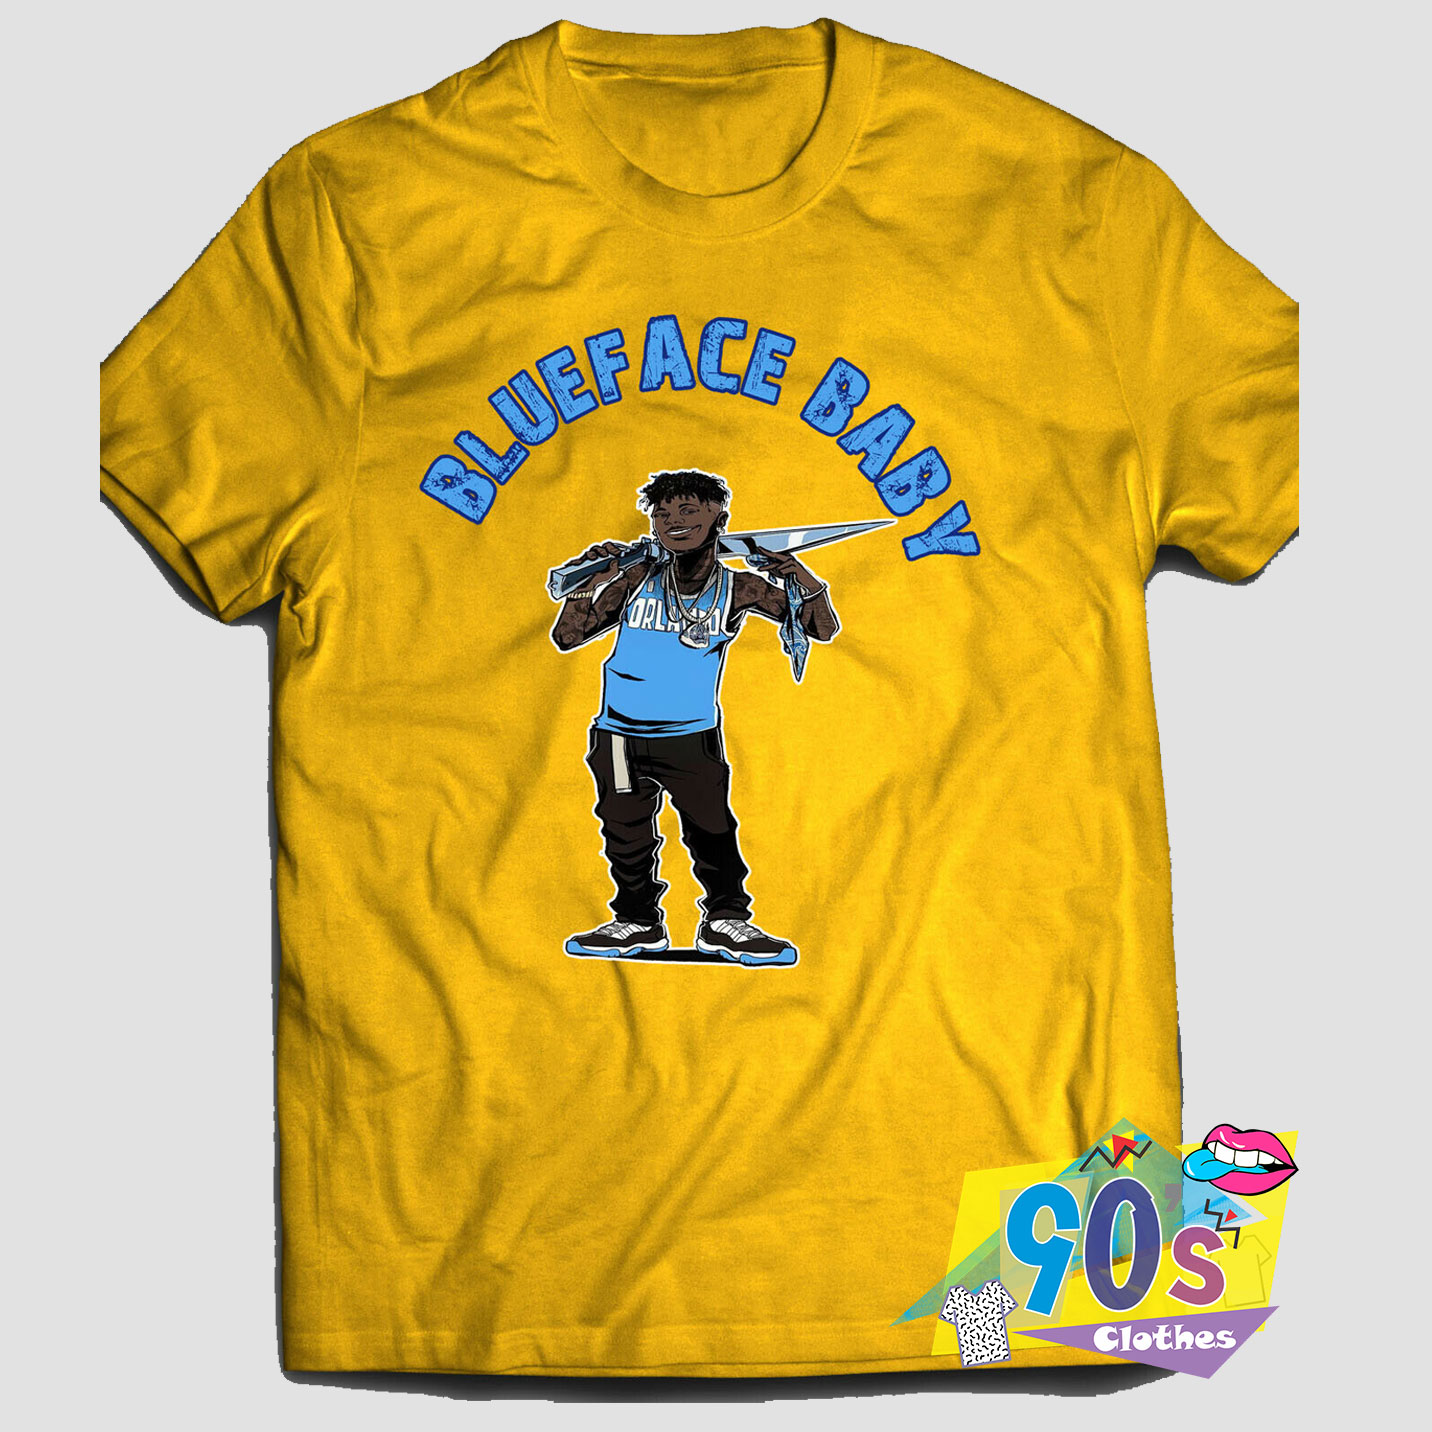 Blueface Baby Cartoon Rapper T Shirt On Sale - 90sclothes.com